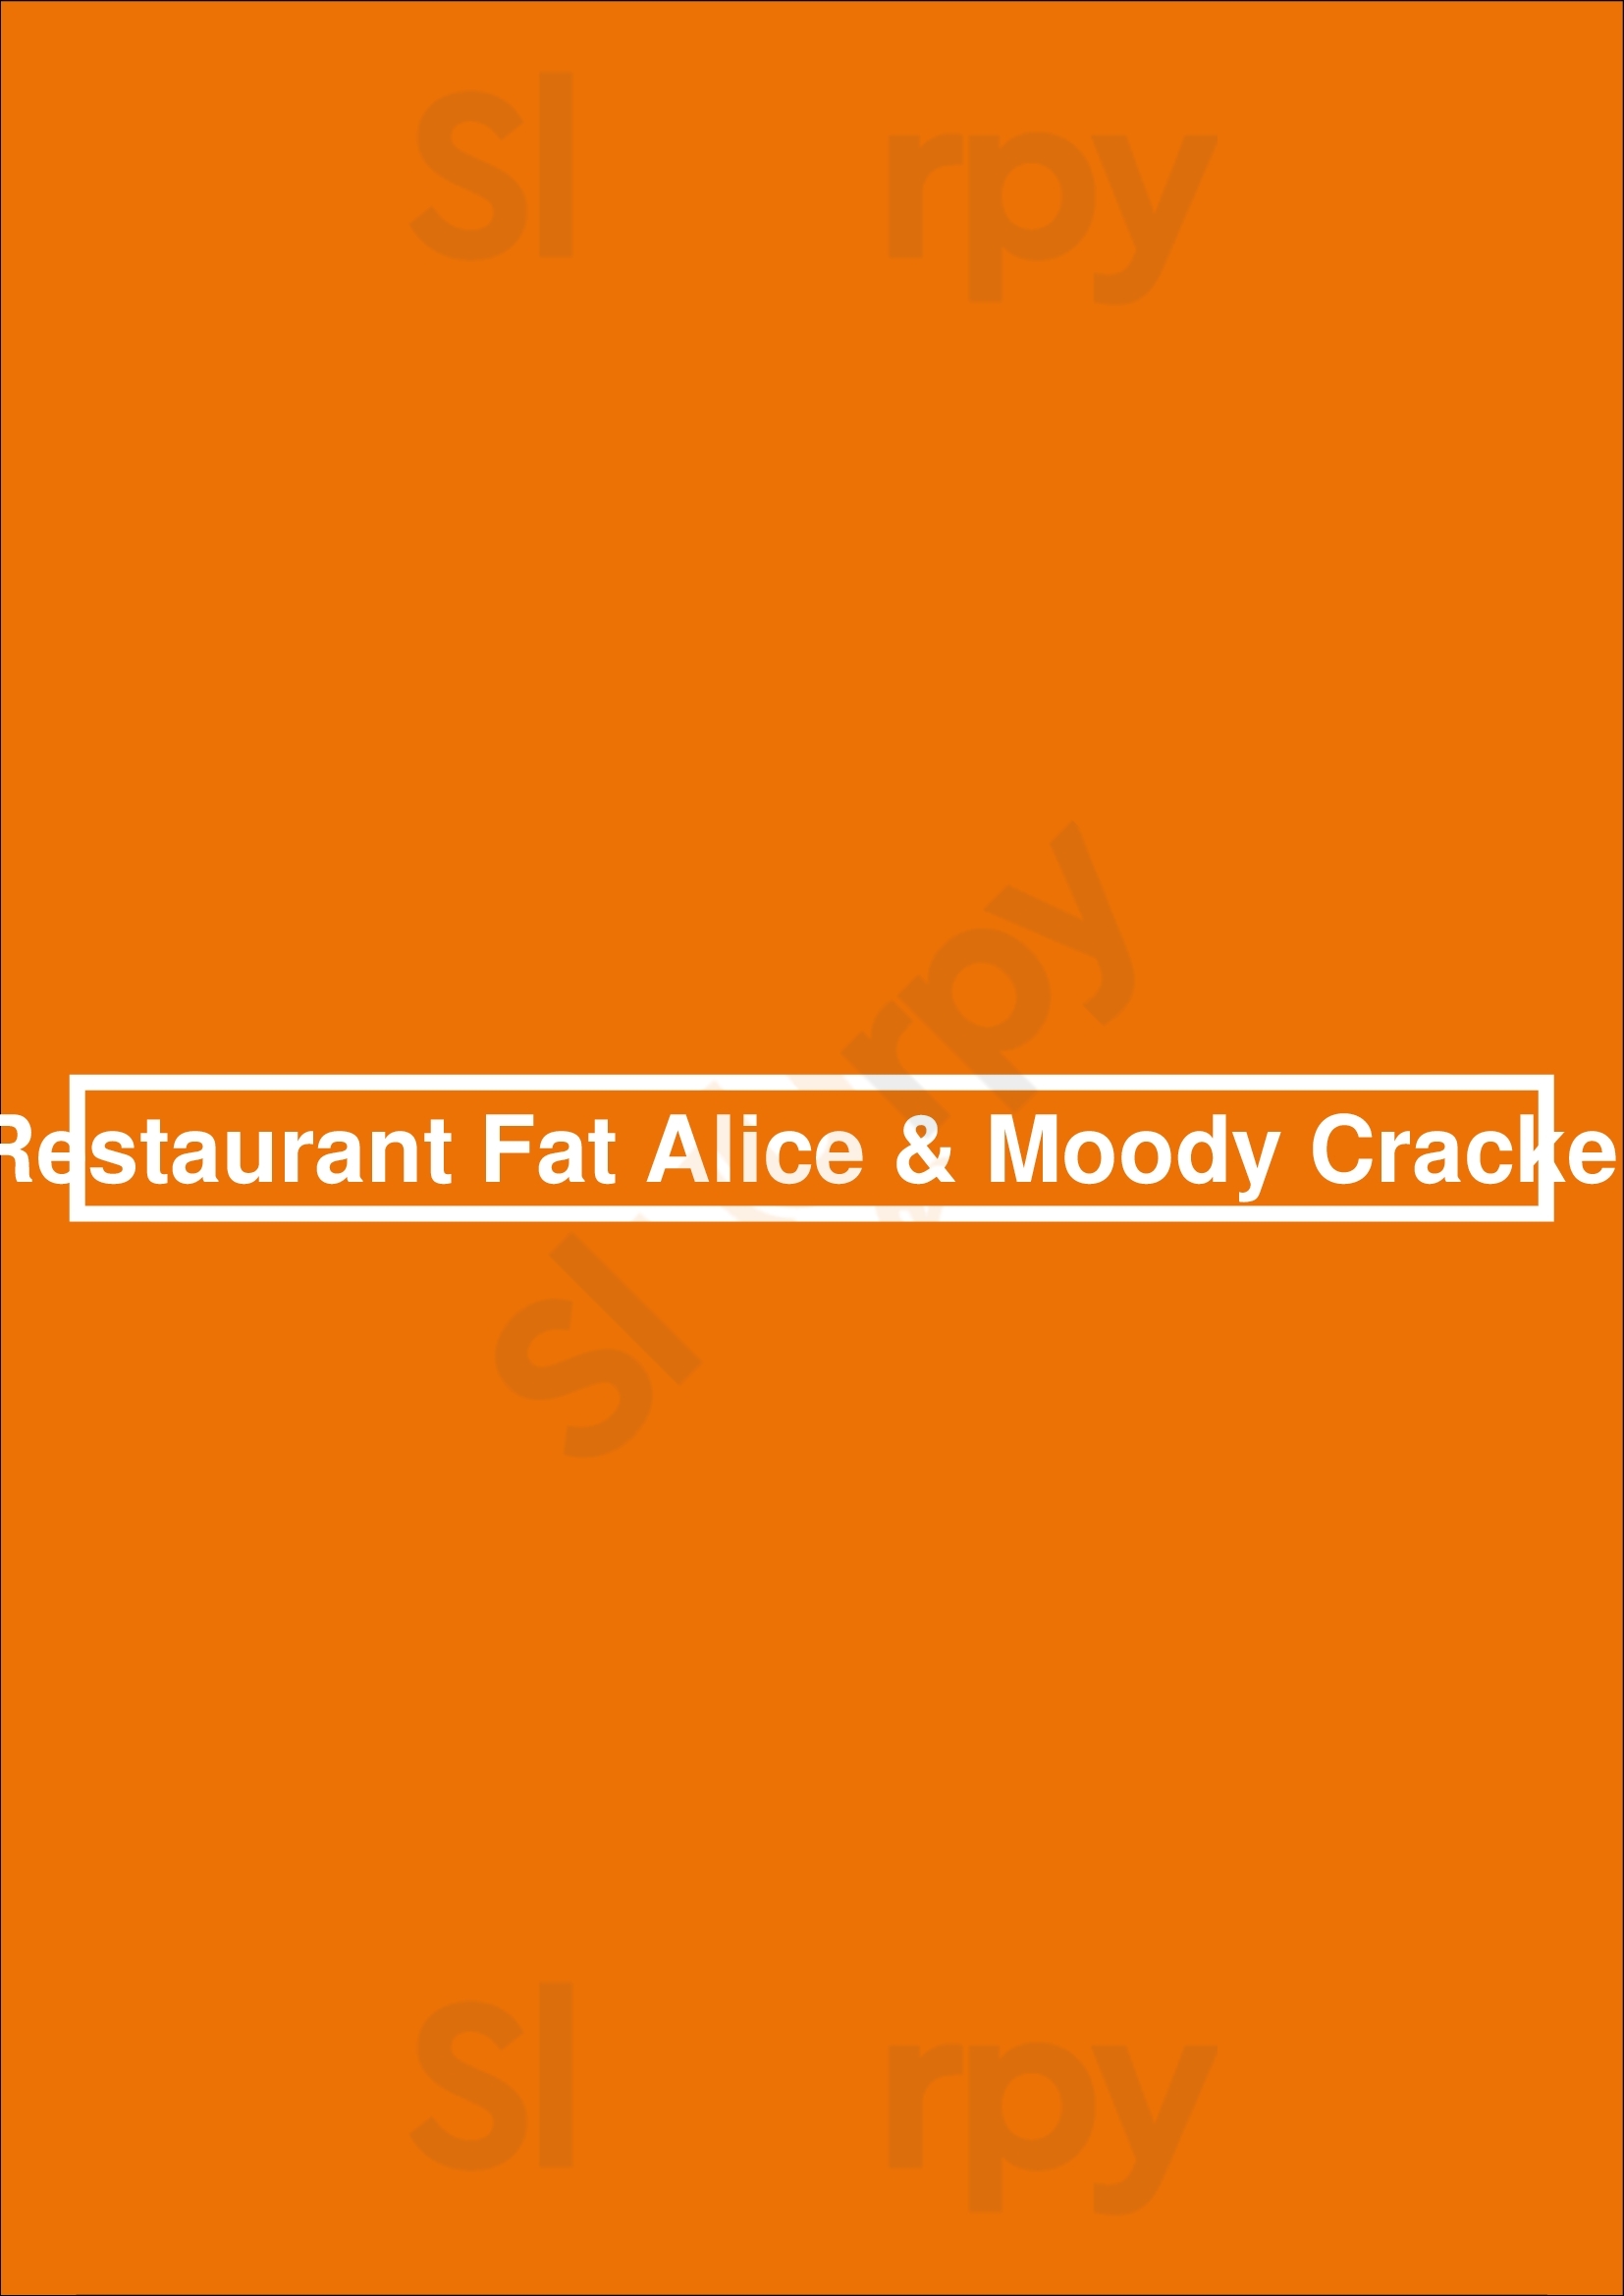 Restaurant Fat Alice & Moody Cracker Nunspeet Menu - 1